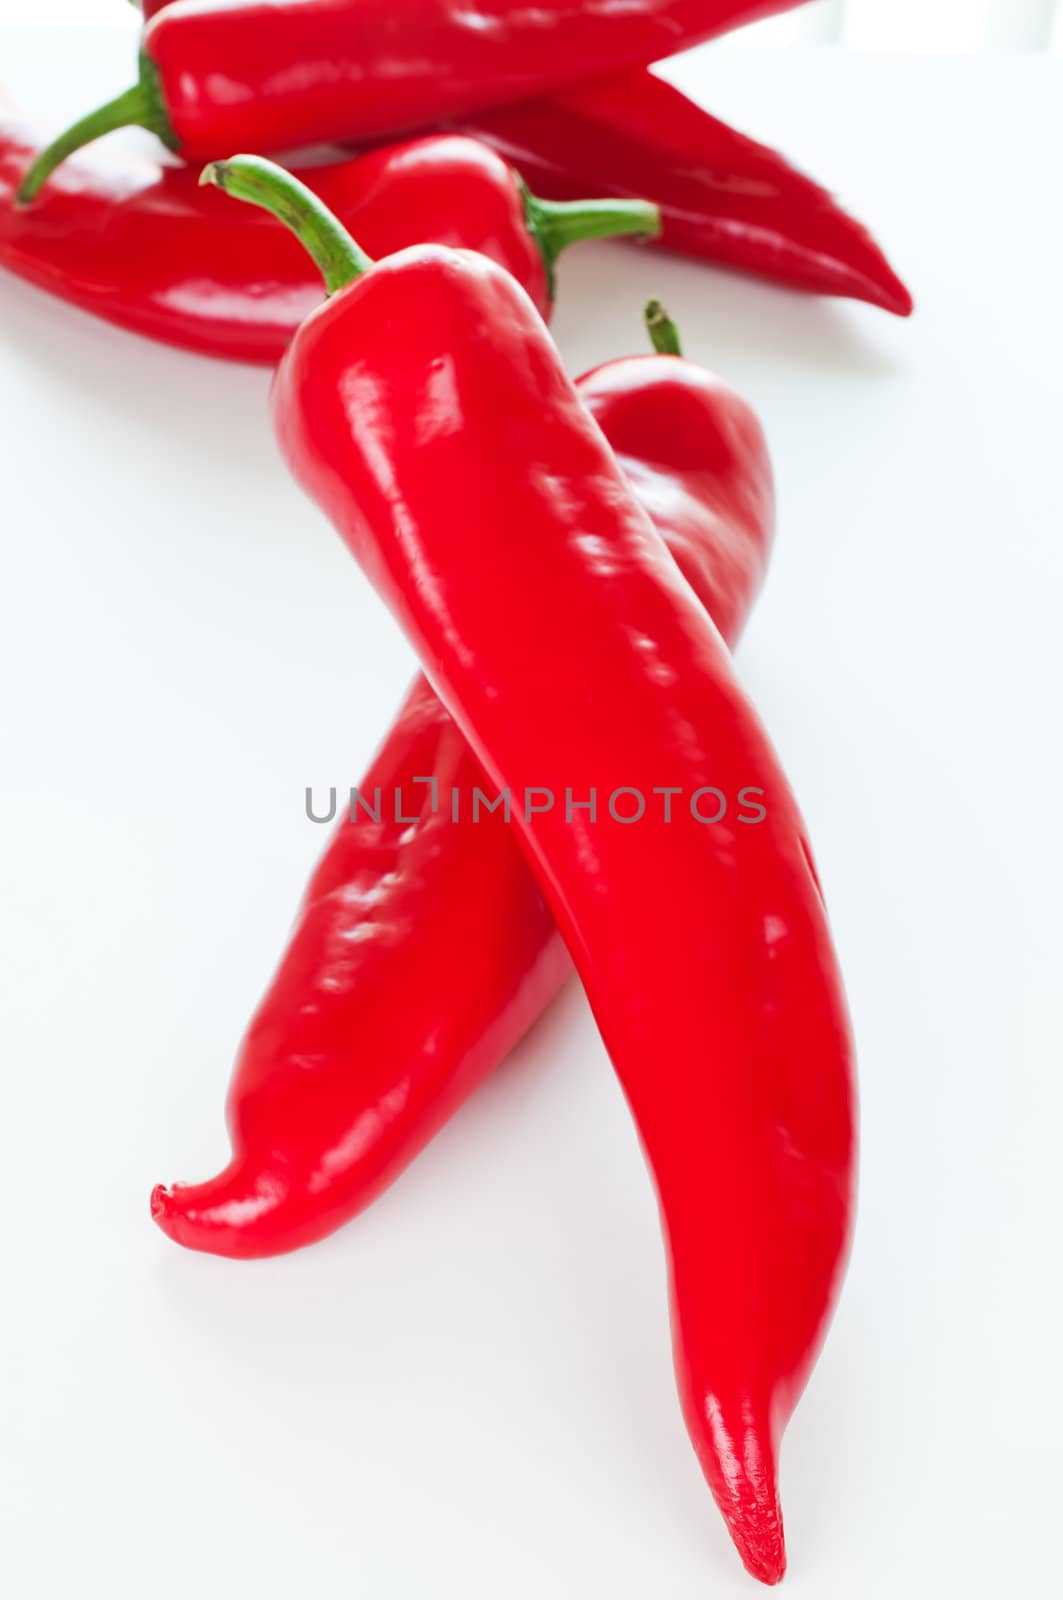 Paprika peppers by Nanisimova